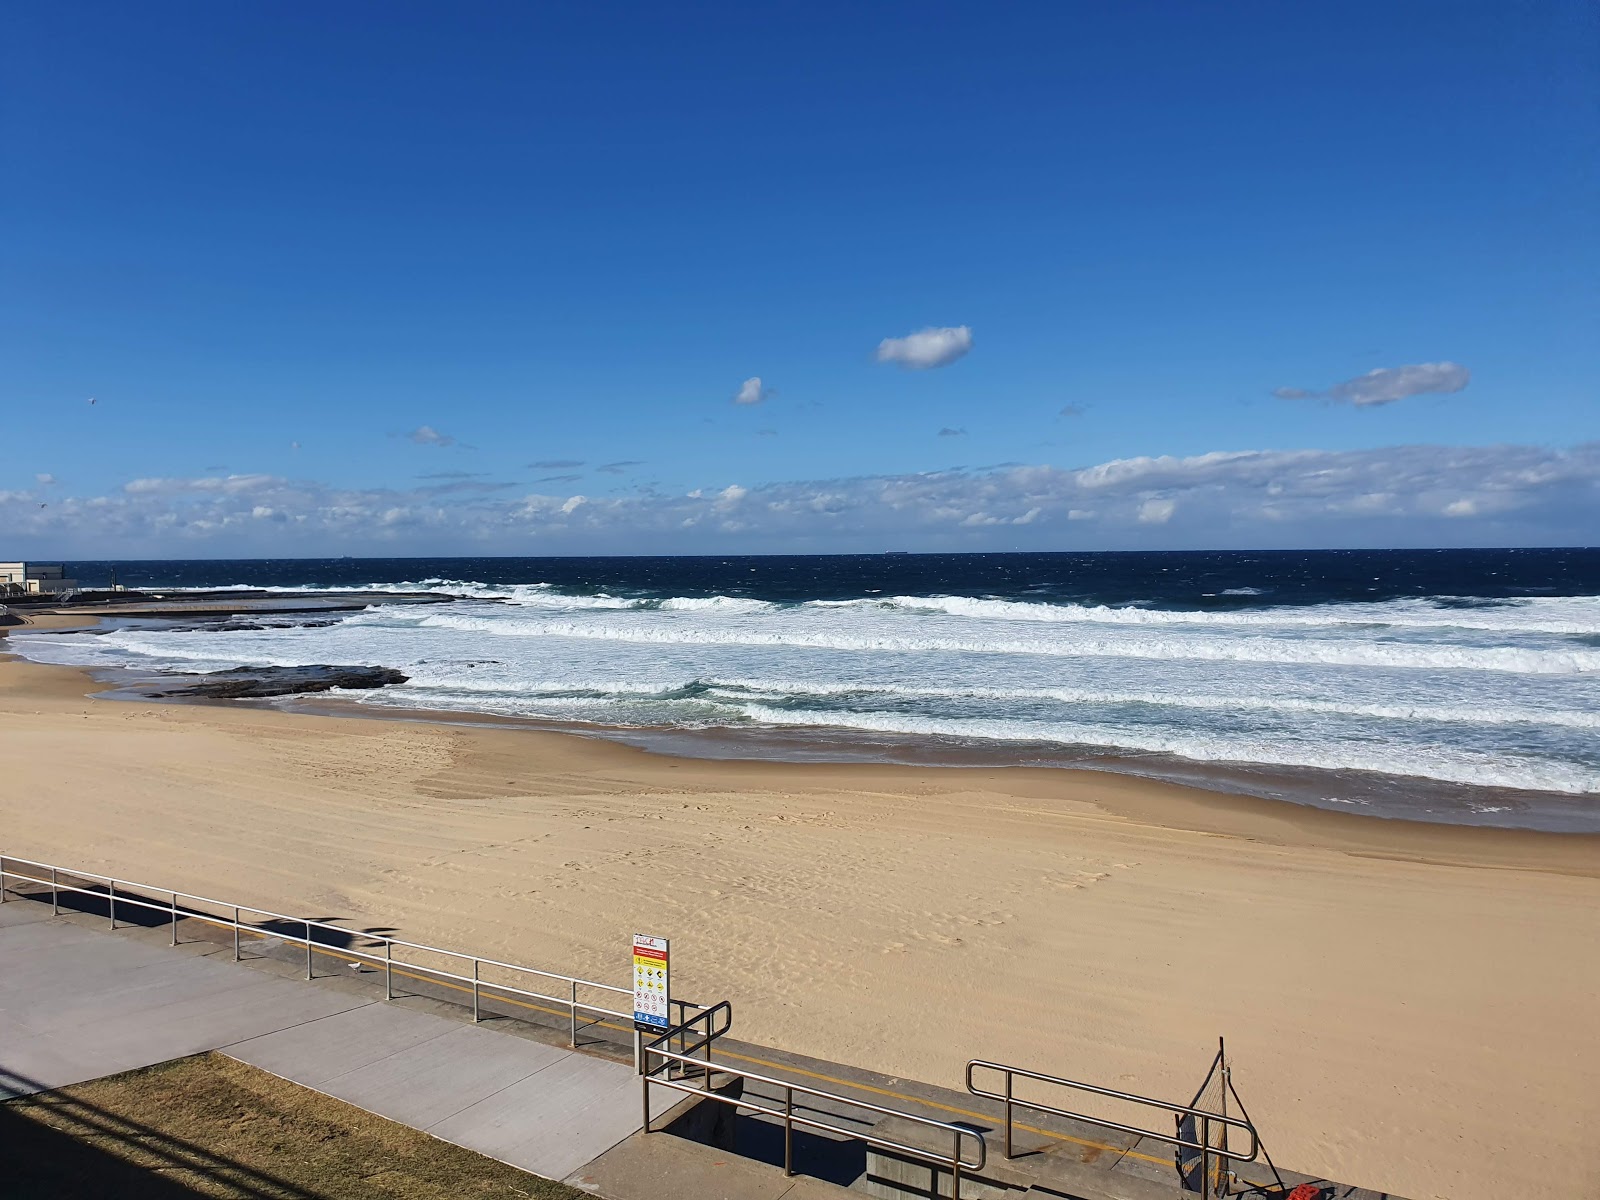 Foto de Newcastle Beach - lugar popular entre os apreciadores de relaxamento